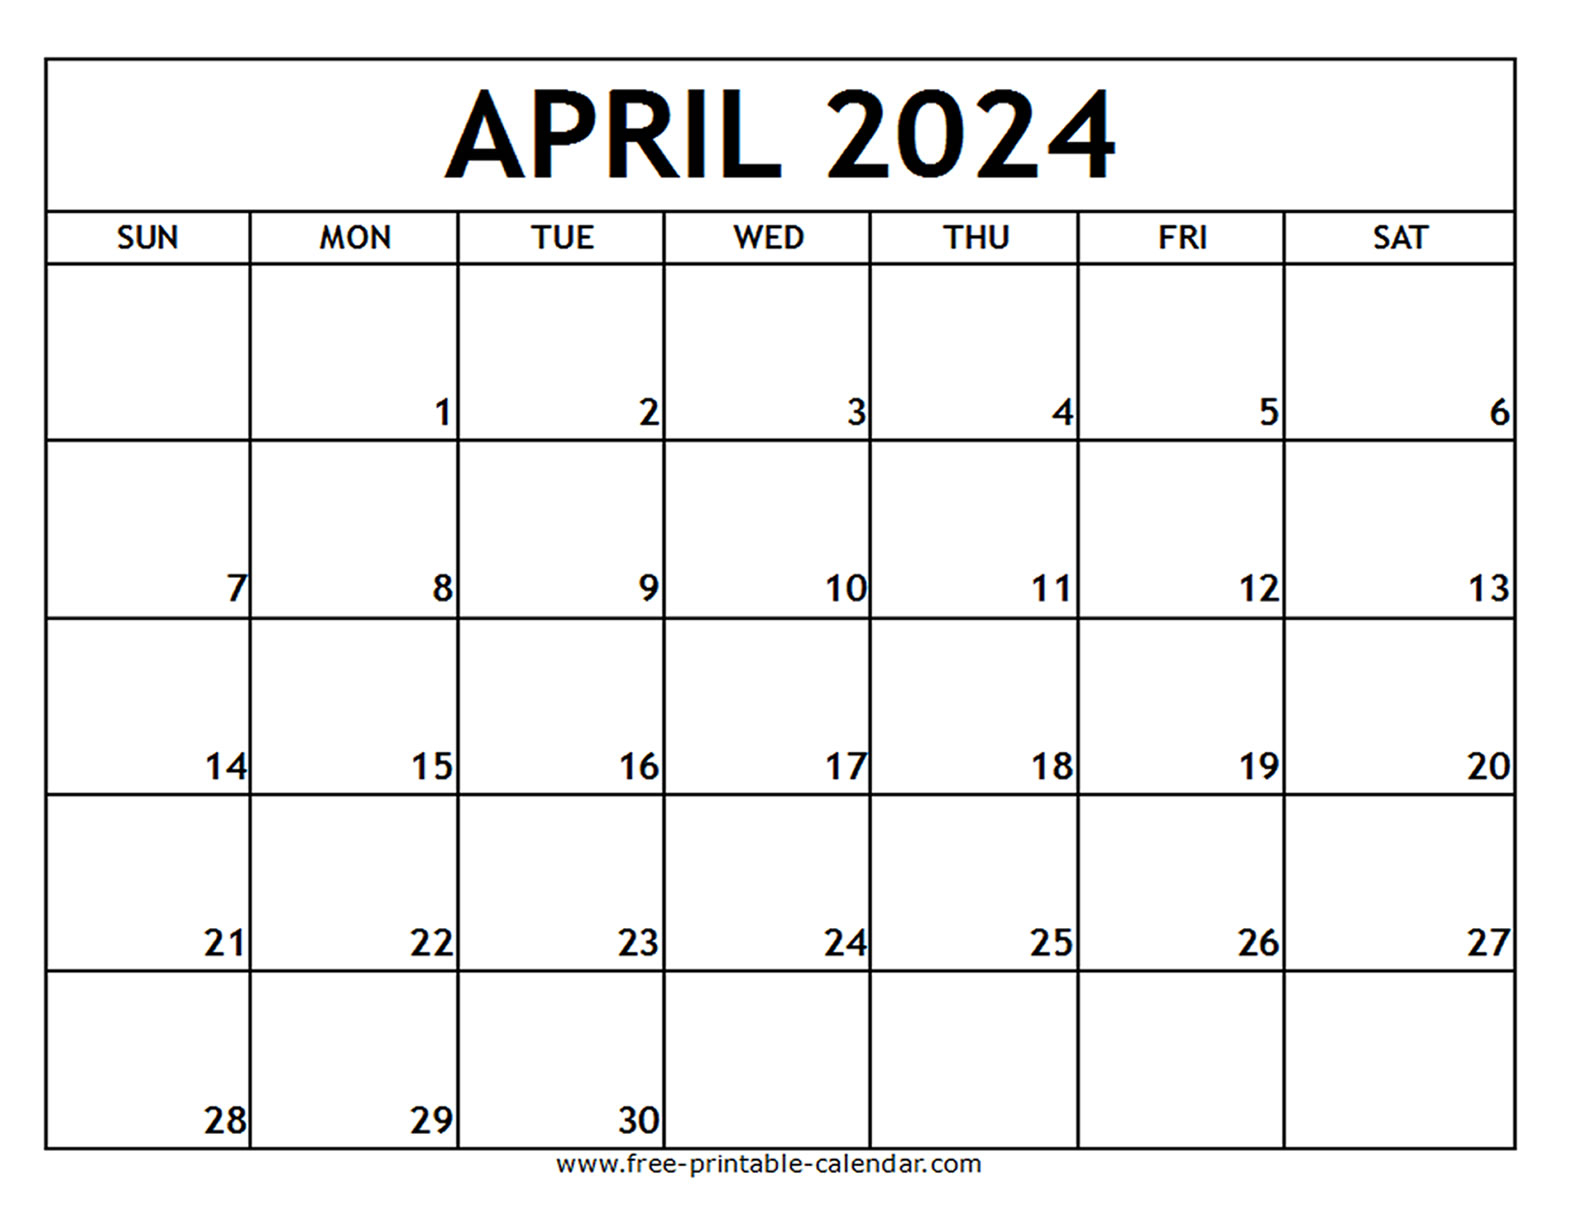 April 2024 Printable Calendar - Free-Printable-Calendar regarding Blank Calendar April 2024